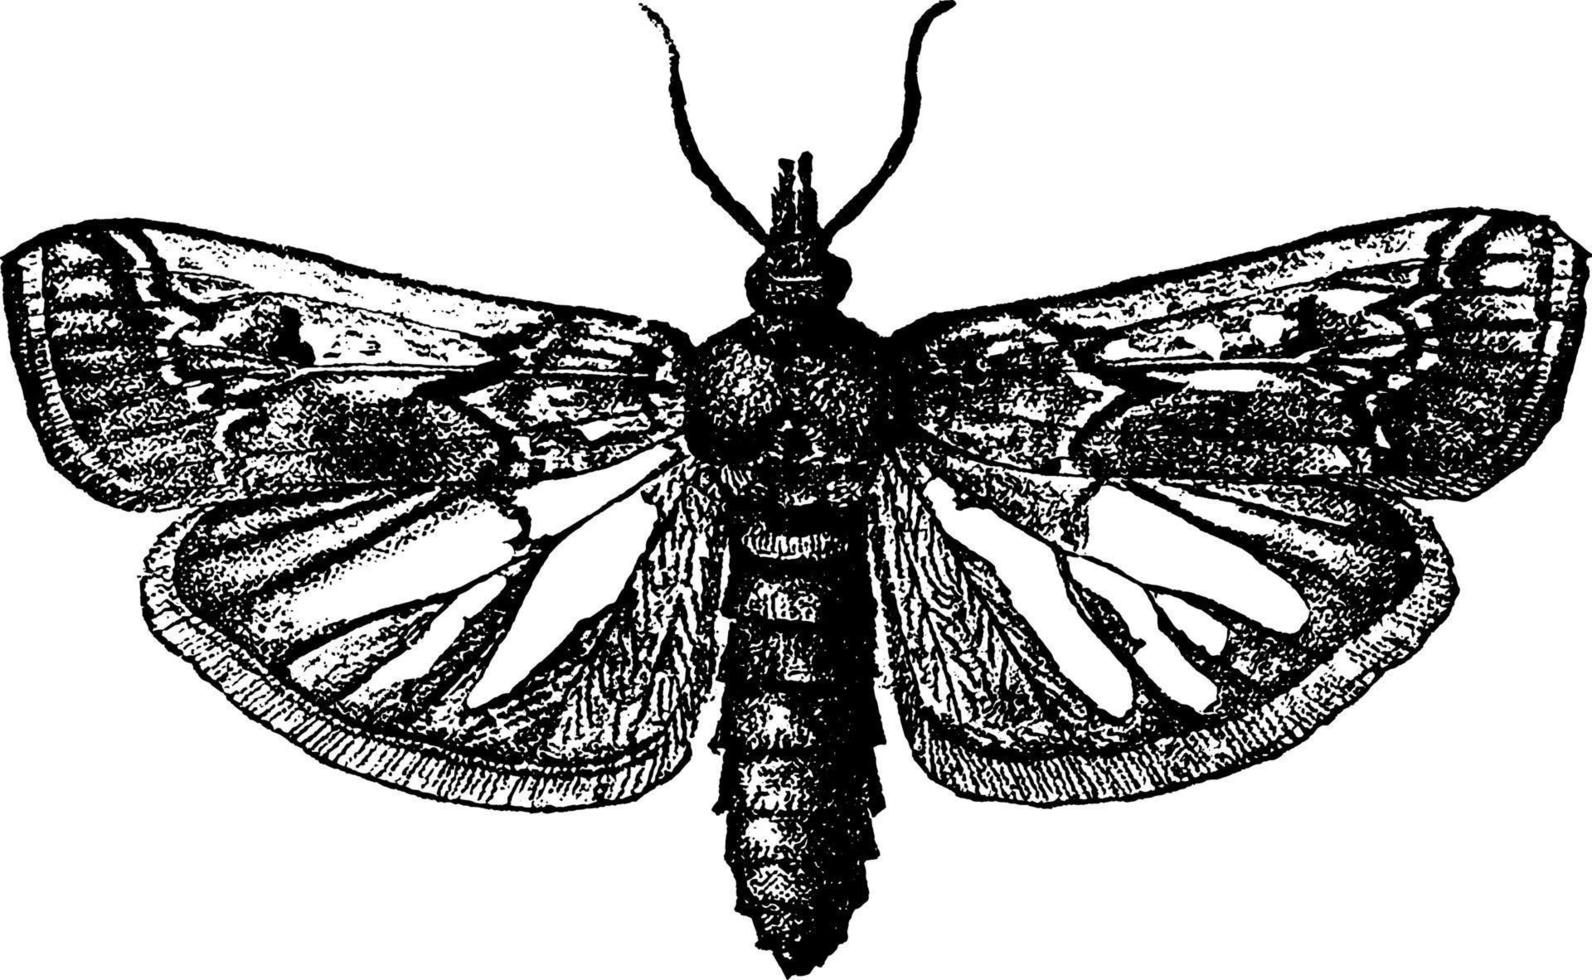 mariposa ou melitara prodenialis, ilustração vintage. vetor